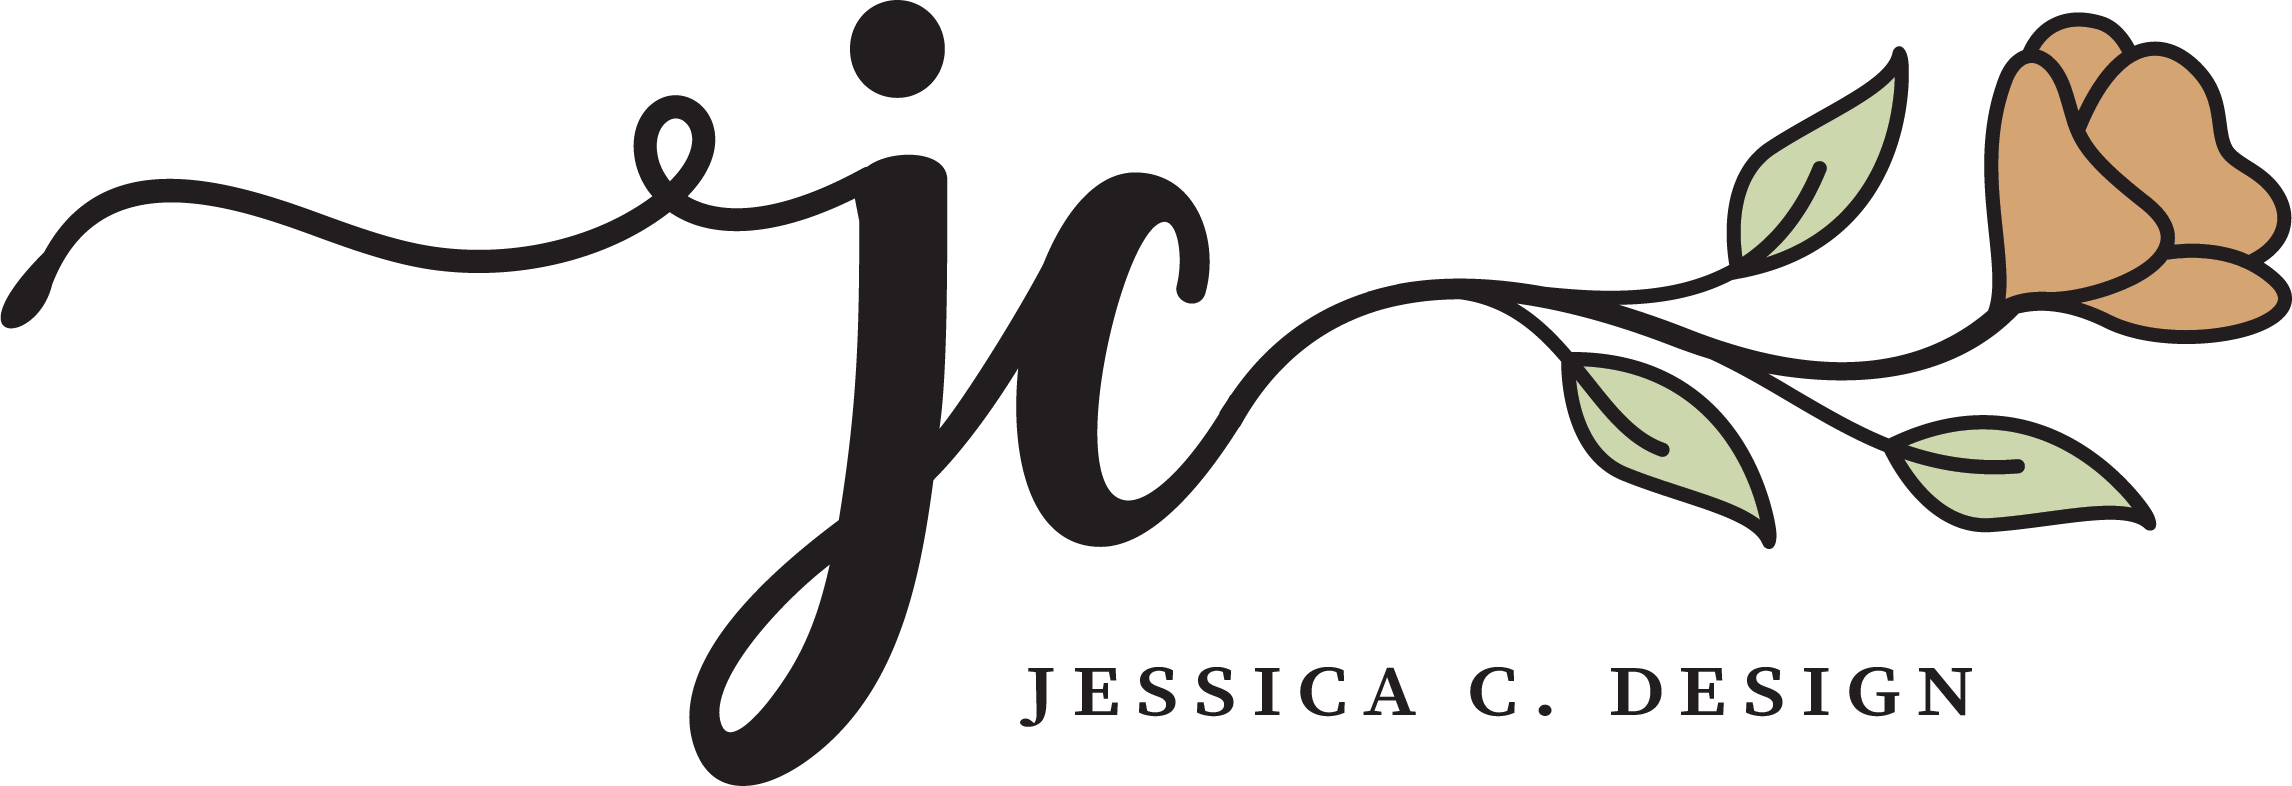 Jessica C. Design